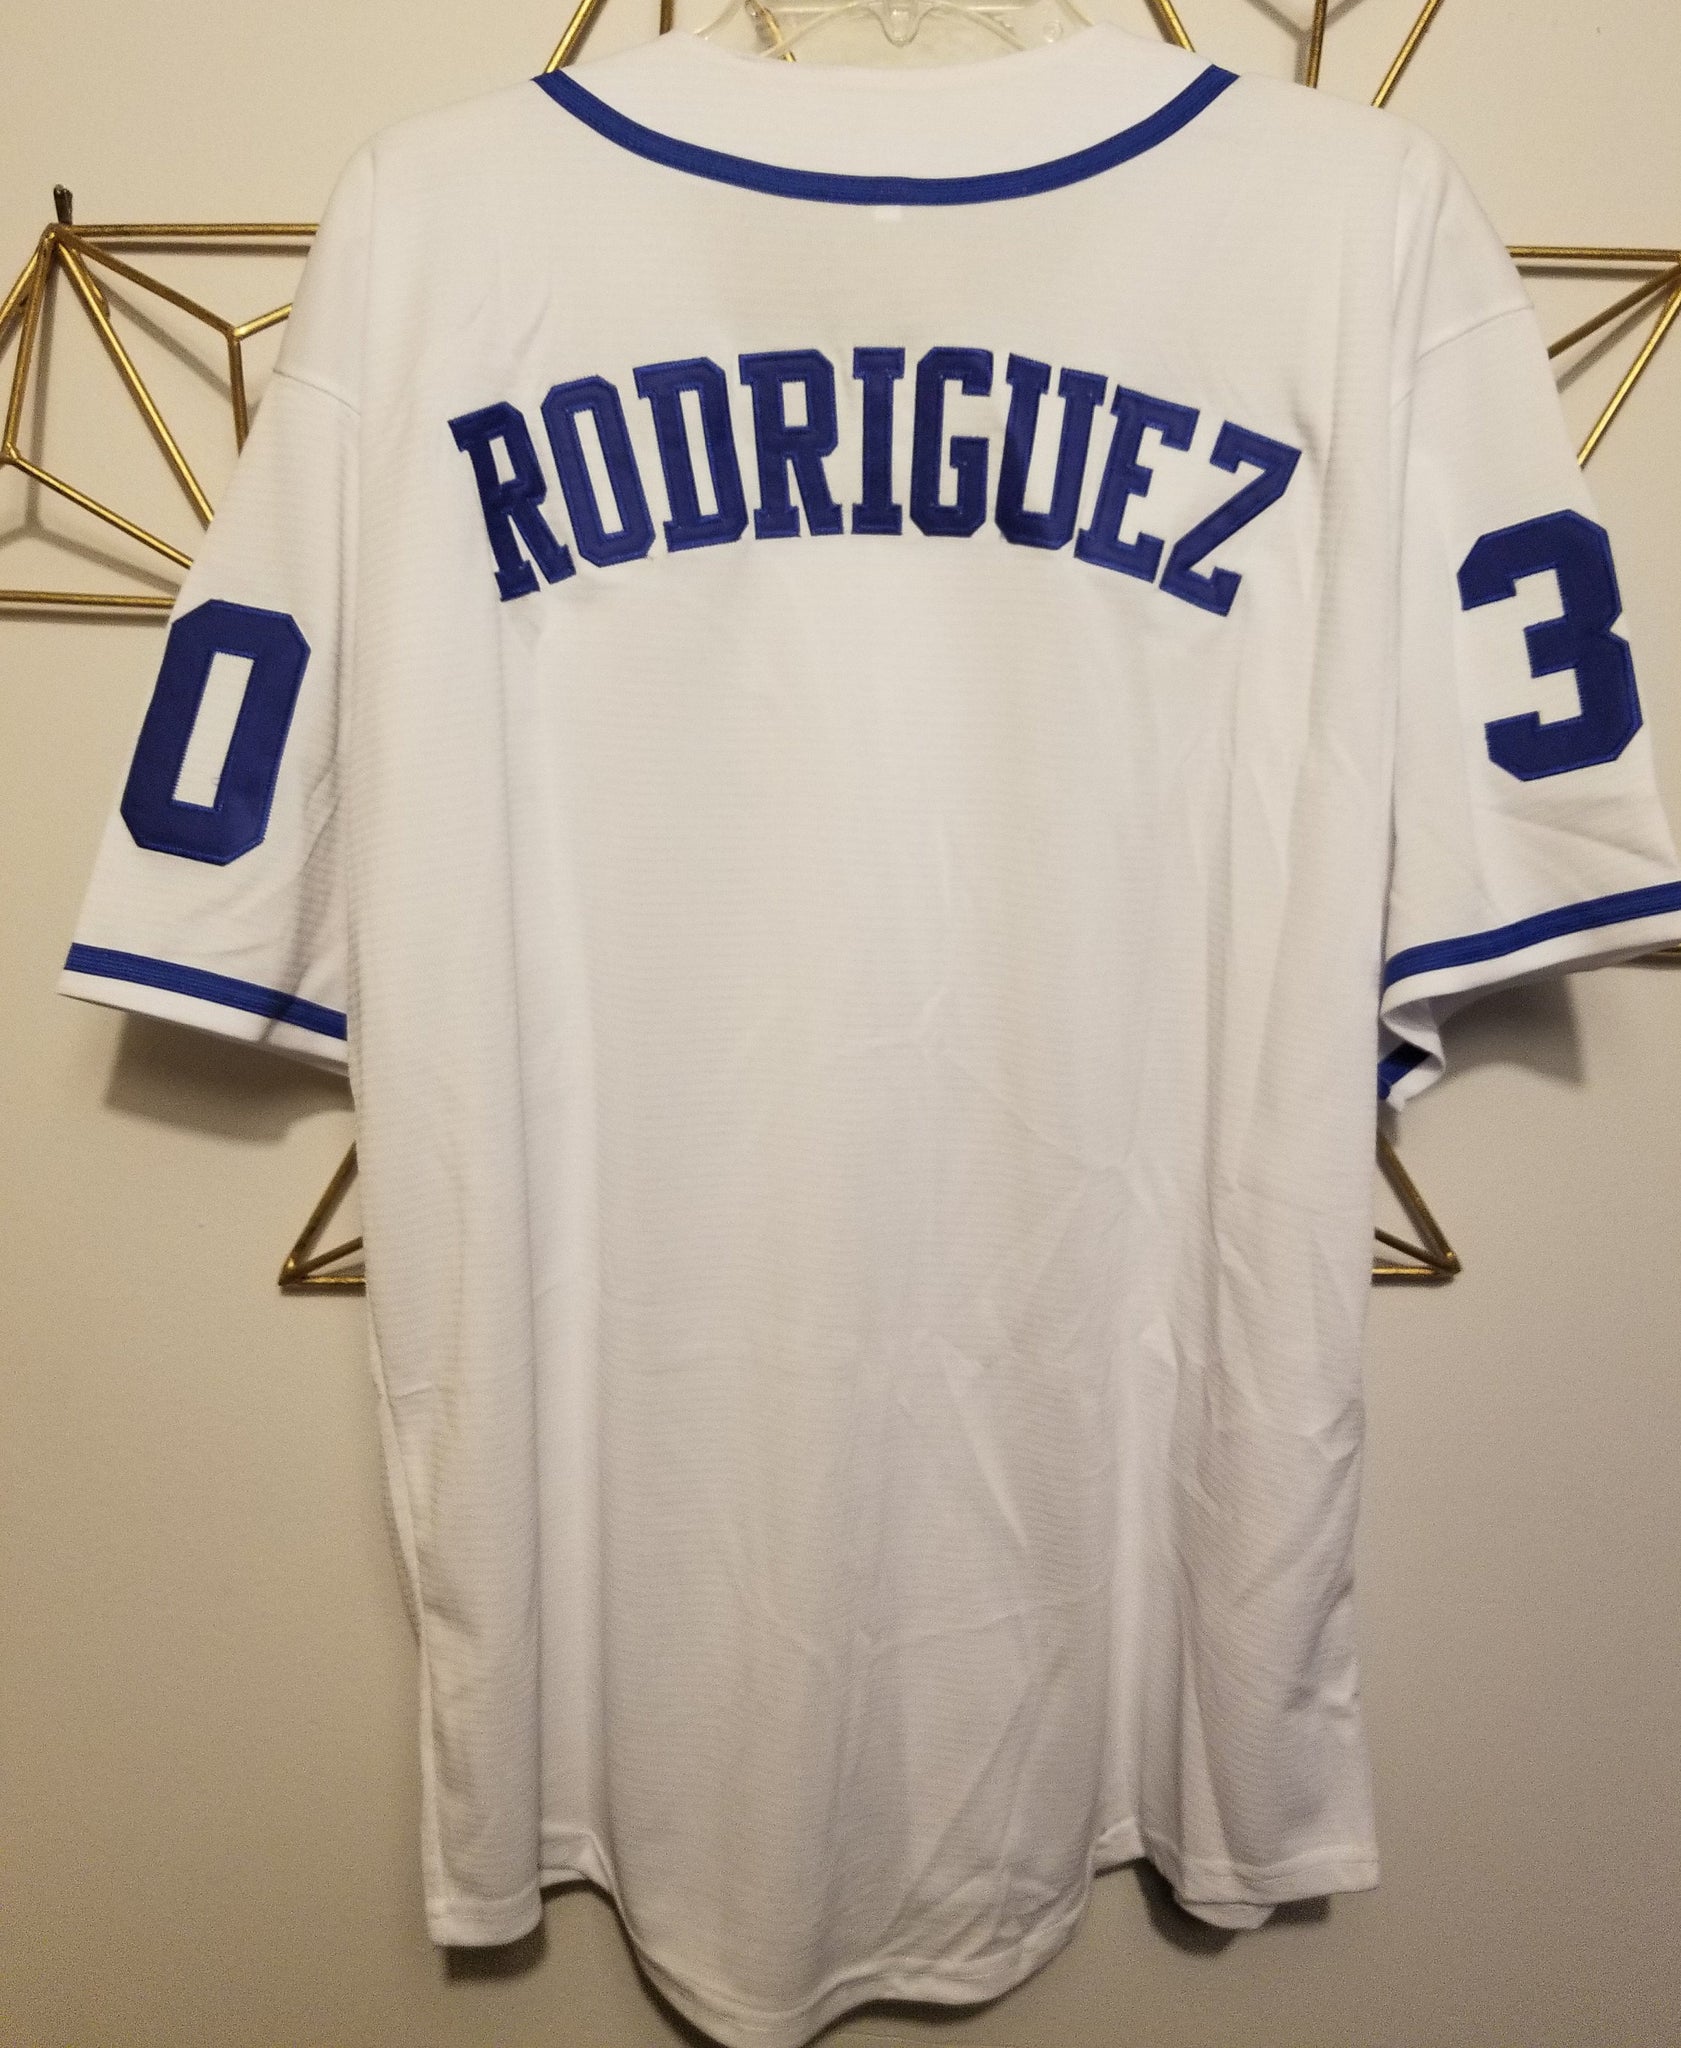 FLASH SALE! Benny Rodriguez The Sandlot Movie #30 Baseball Jersey Cust –  JordansSecretStuff